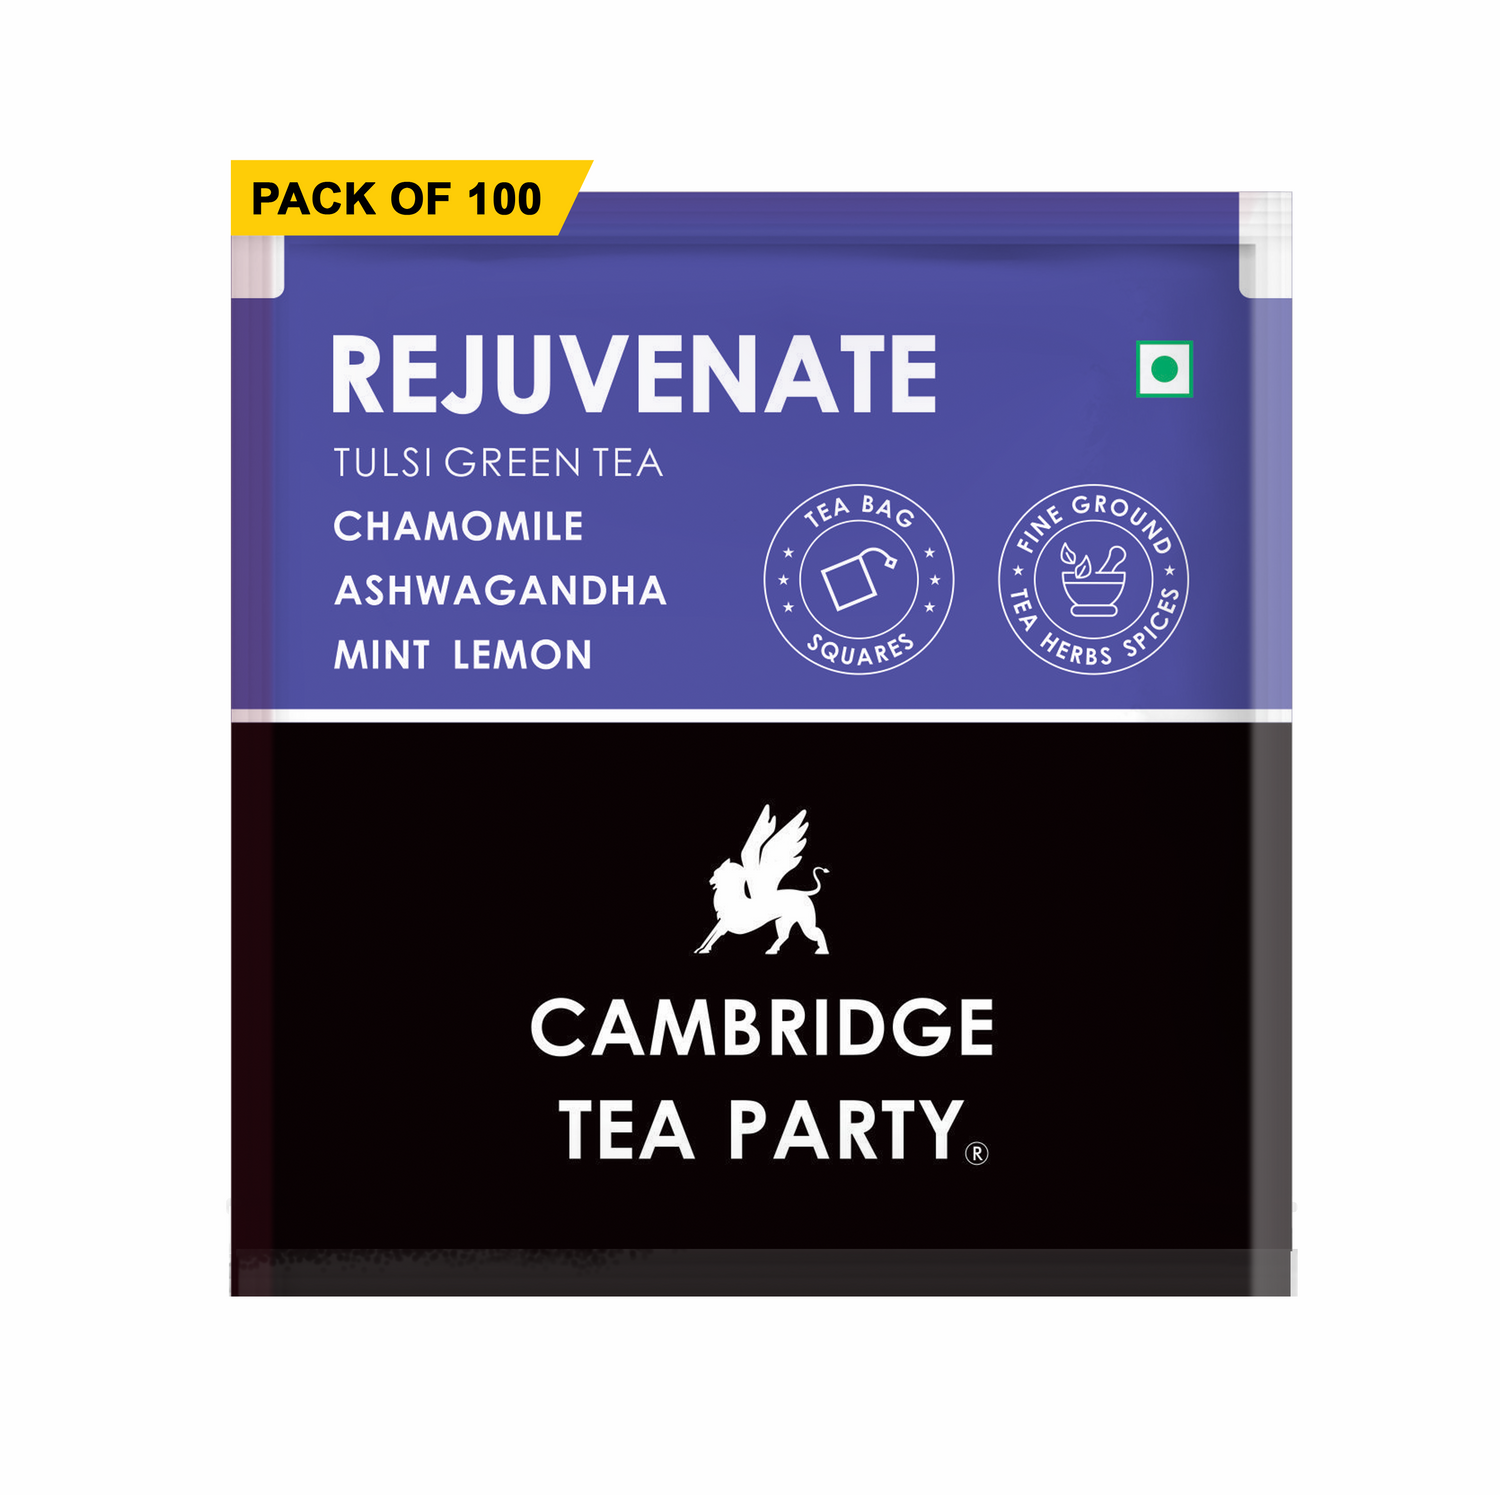 Cambridge Tea Party Rejuvinate 100 Tea Bags, Ashwagandha Chamomile Ginger Lemon Mint Tulsi Green Tea, Bulk Pack 